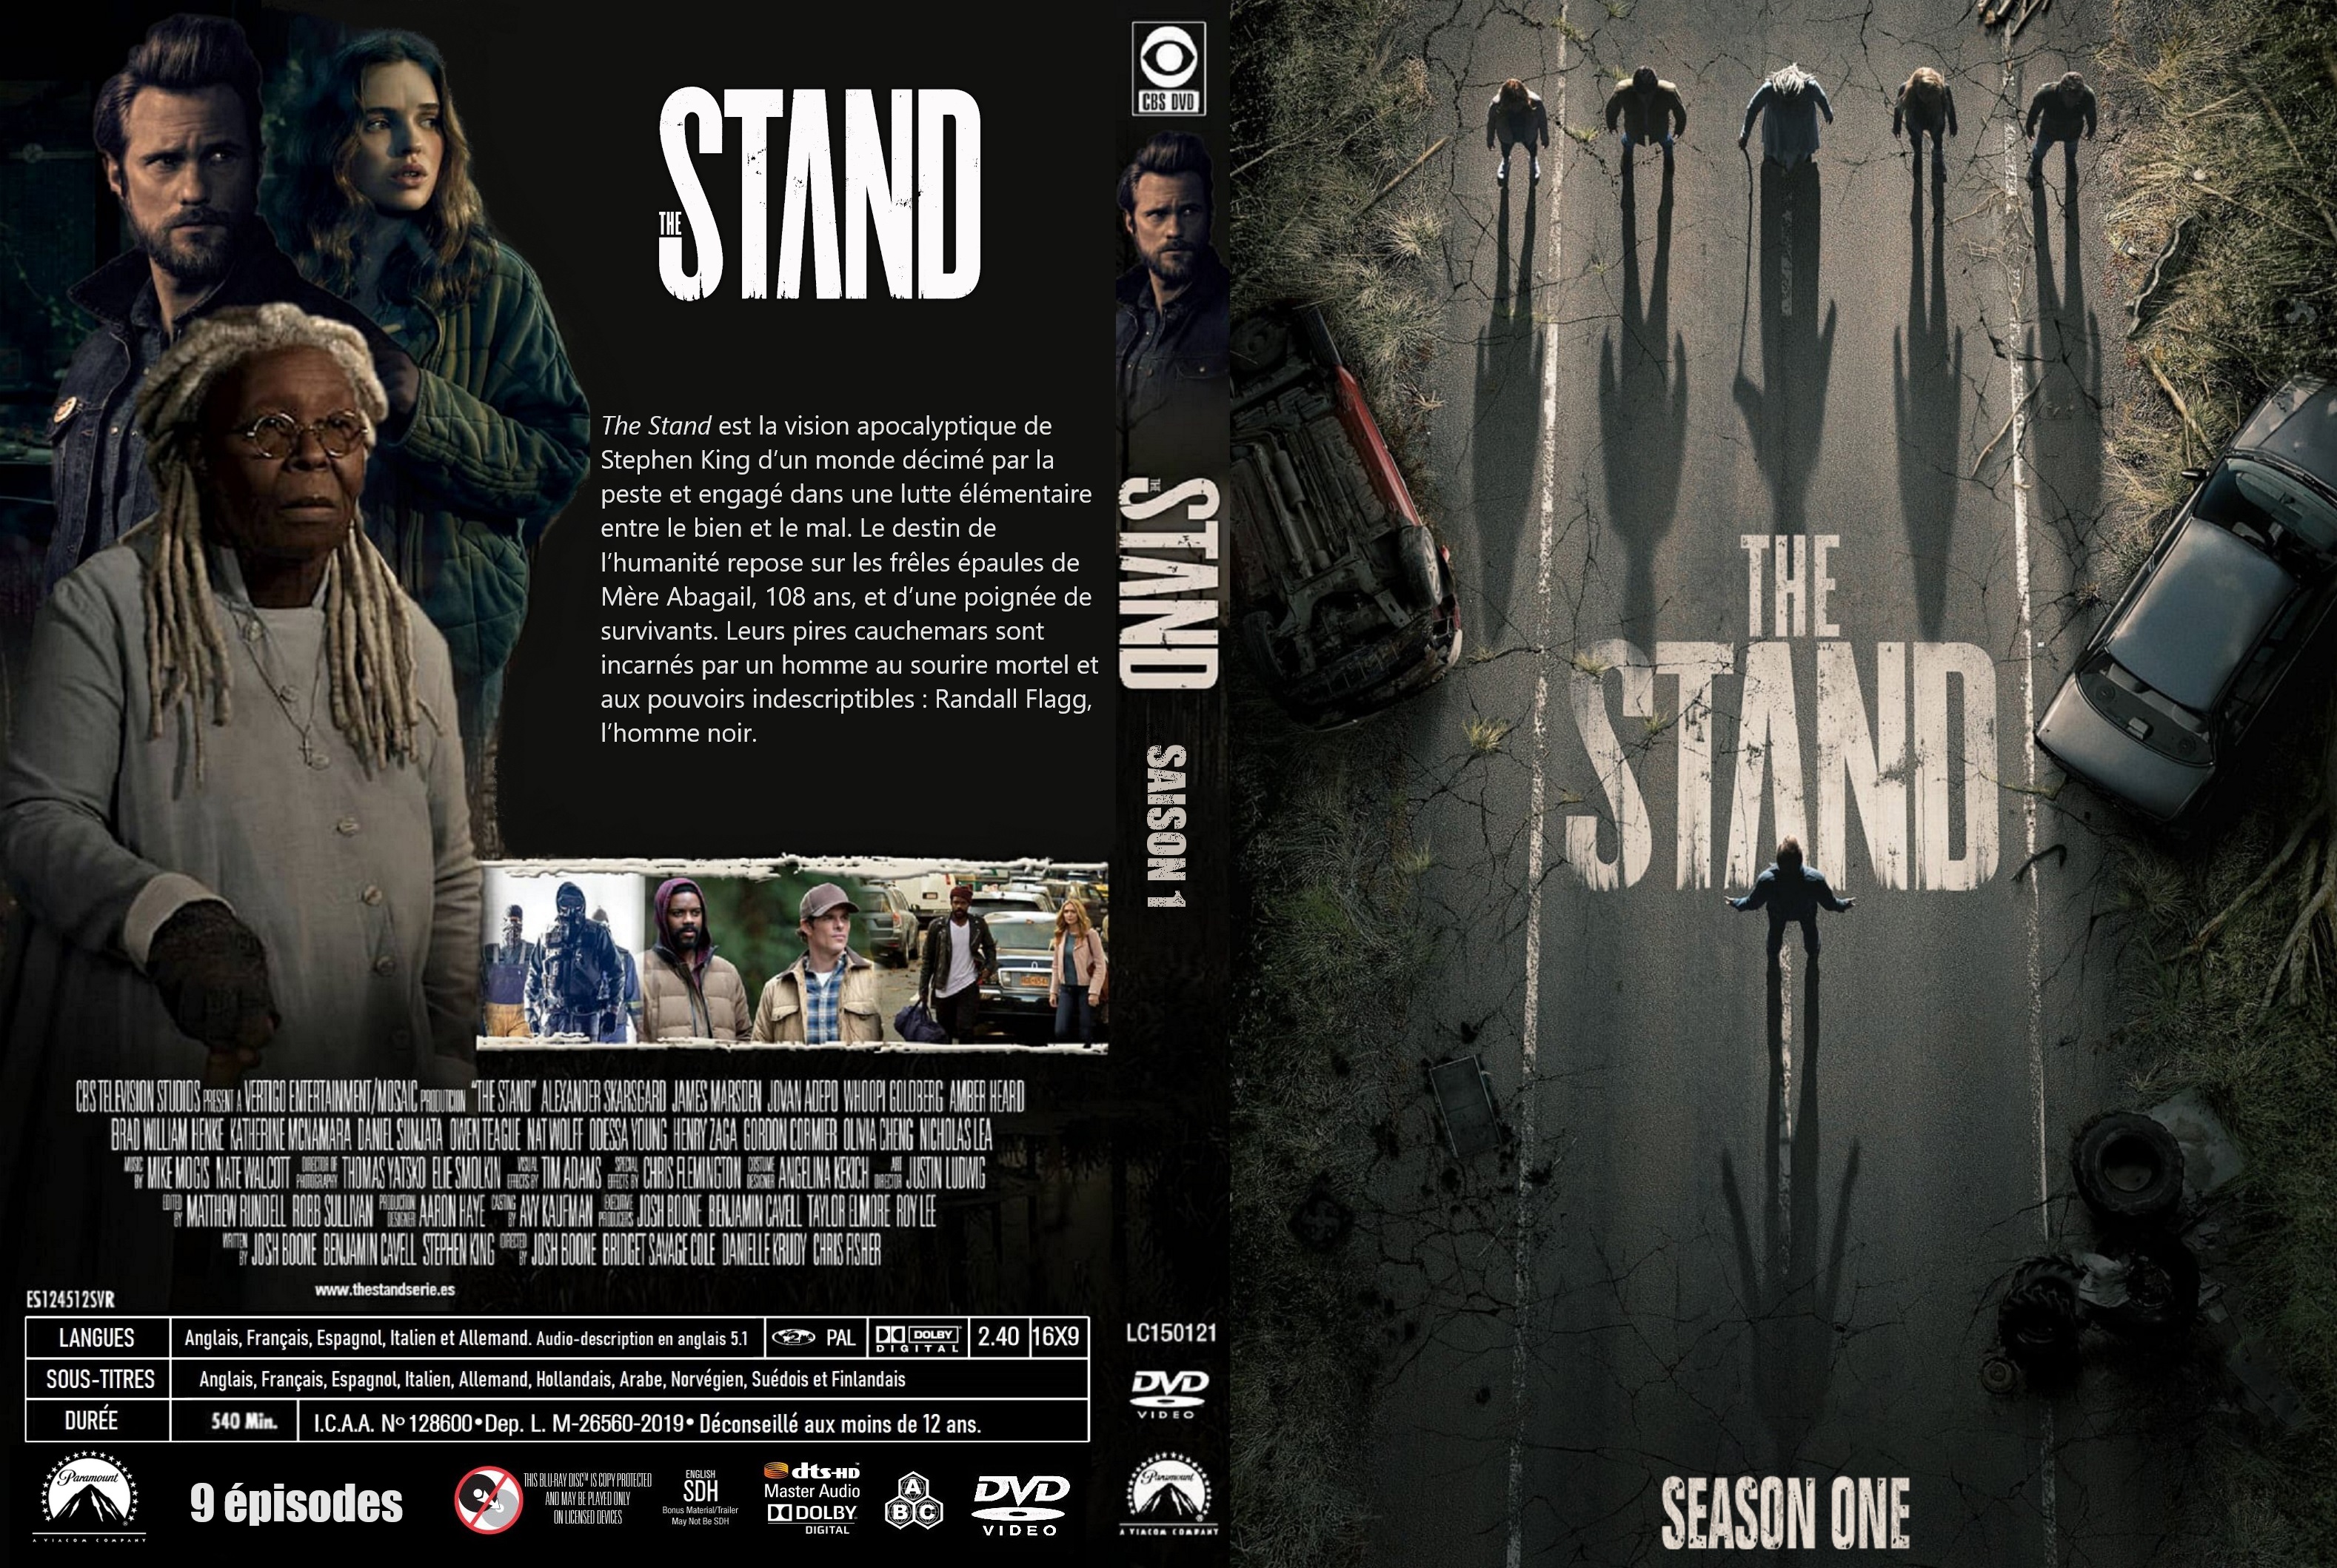 Jaquette DVD The Stand saison 1 custom v2